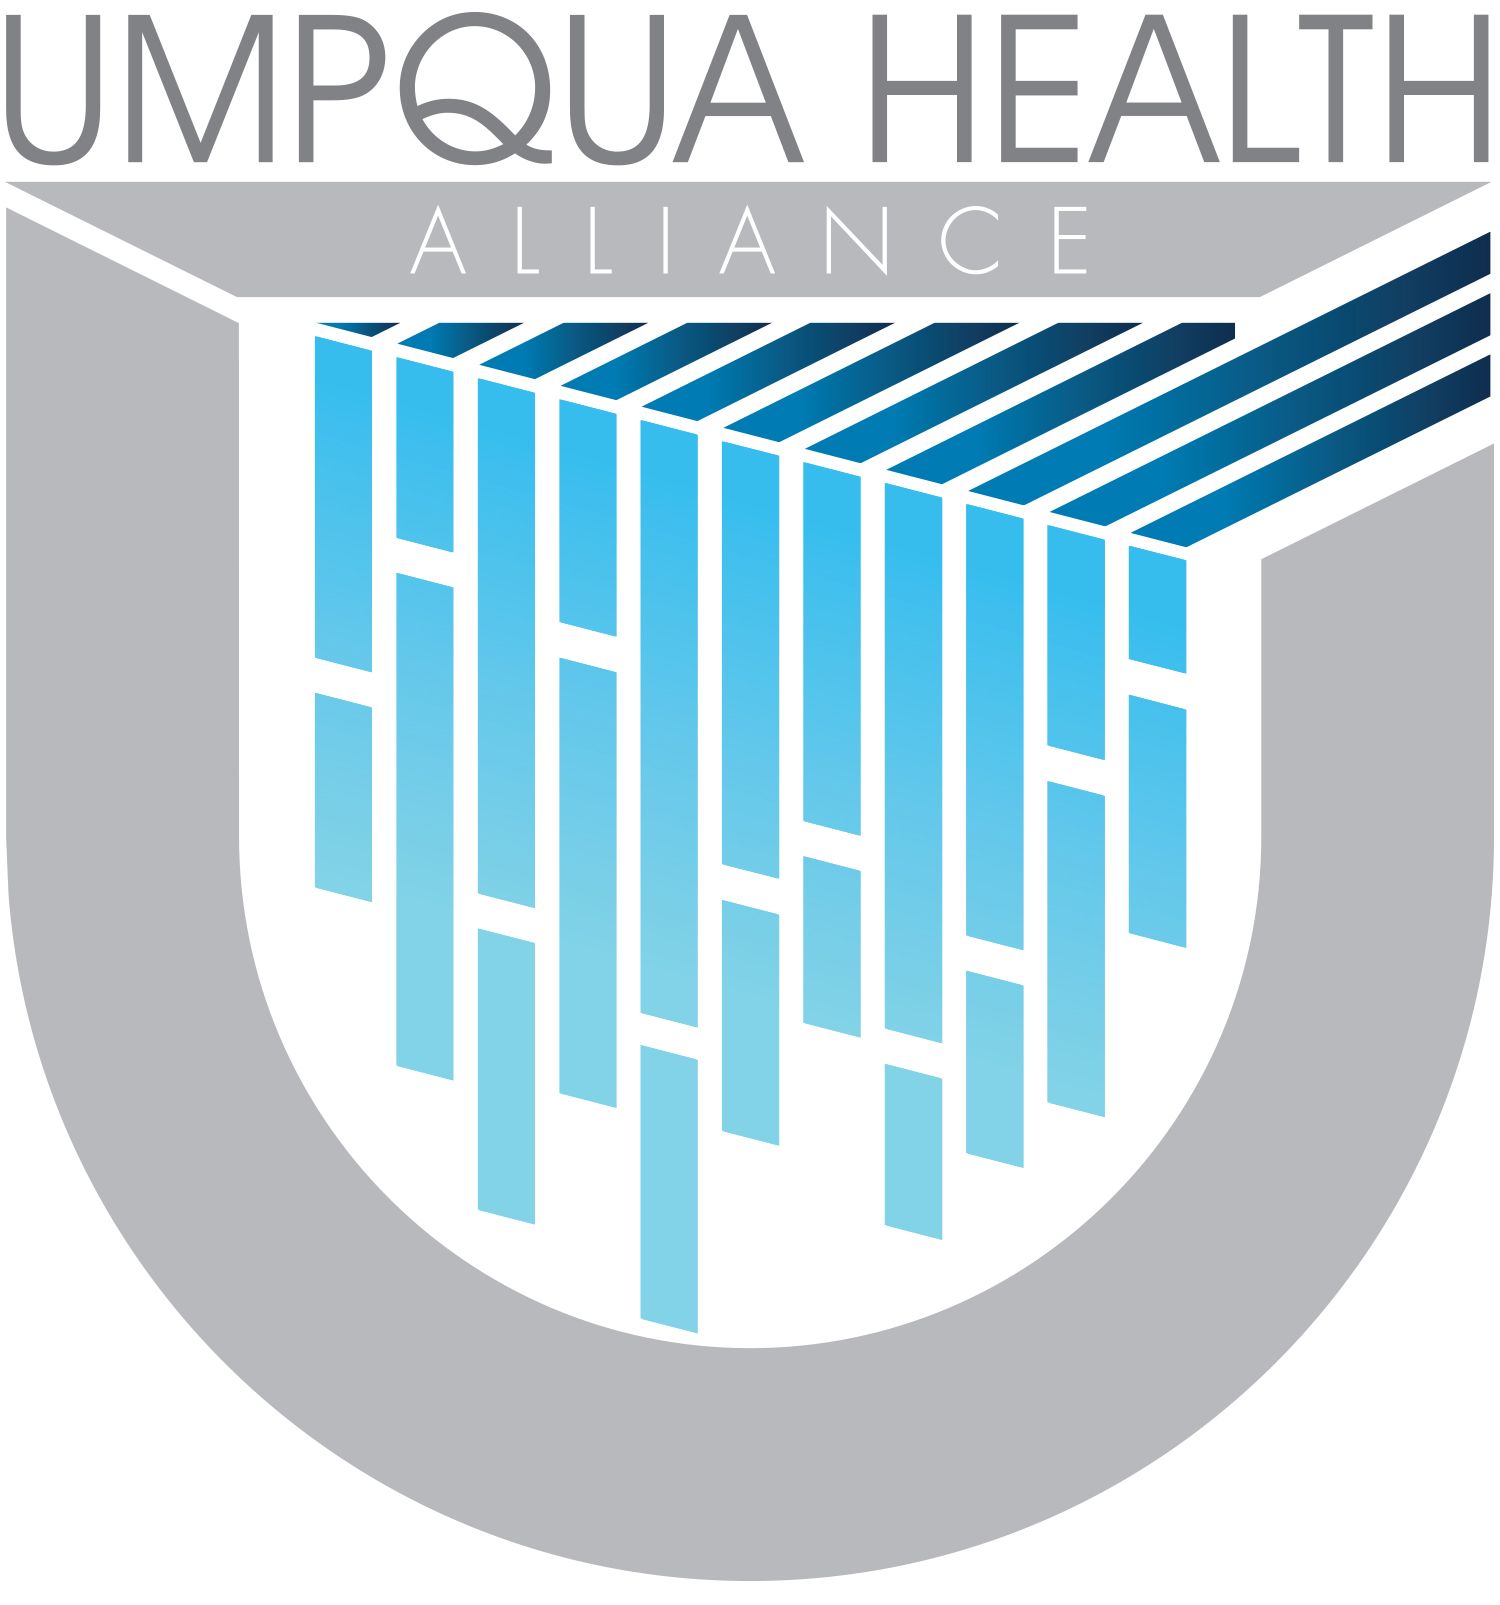 Umpqua Health Alliance